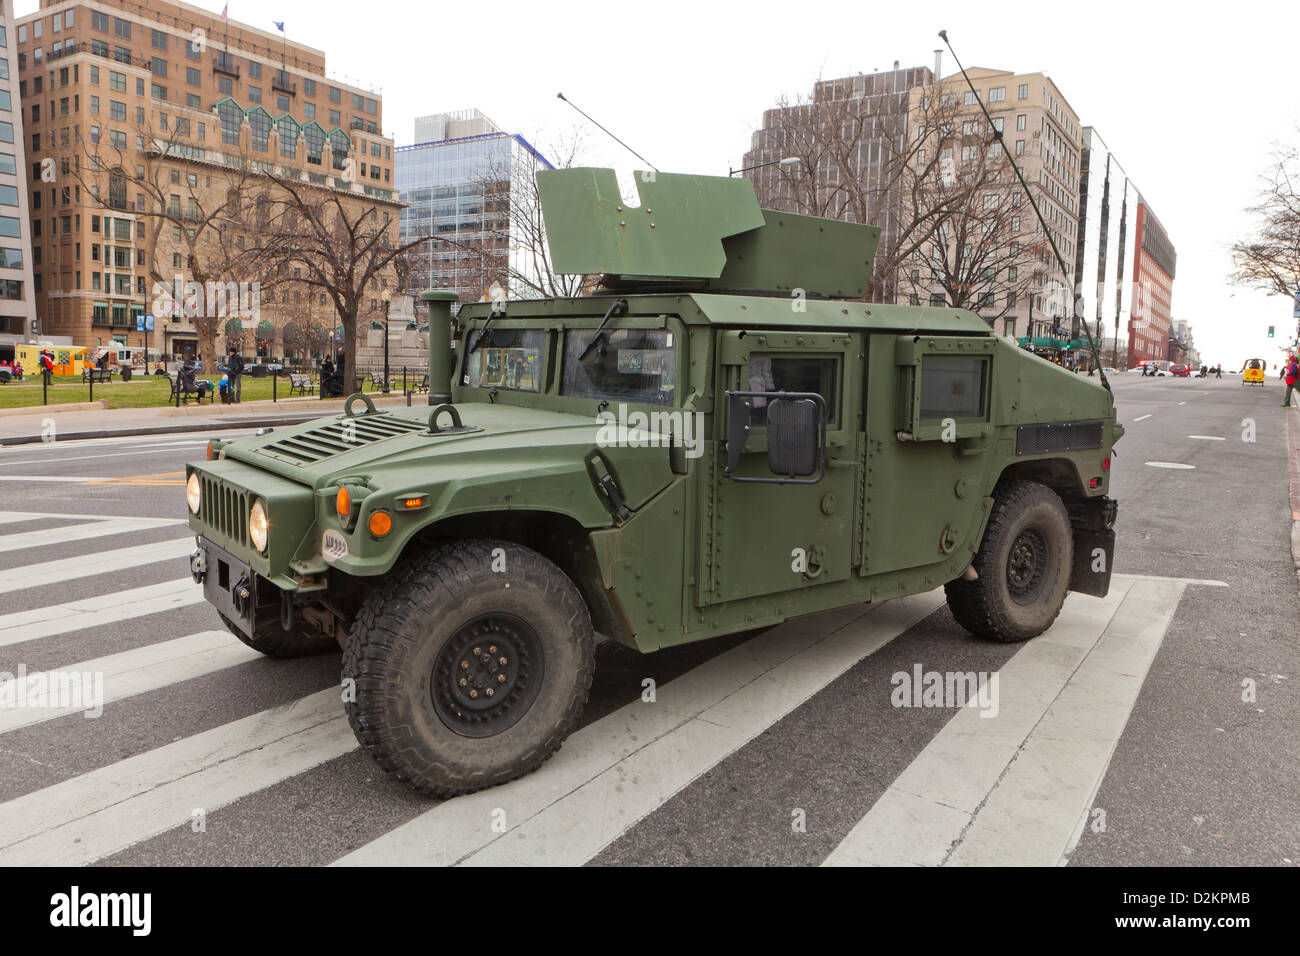 Militari USA Humvee carrello - Washington DC, Stati Uniti d'America Foto Stock